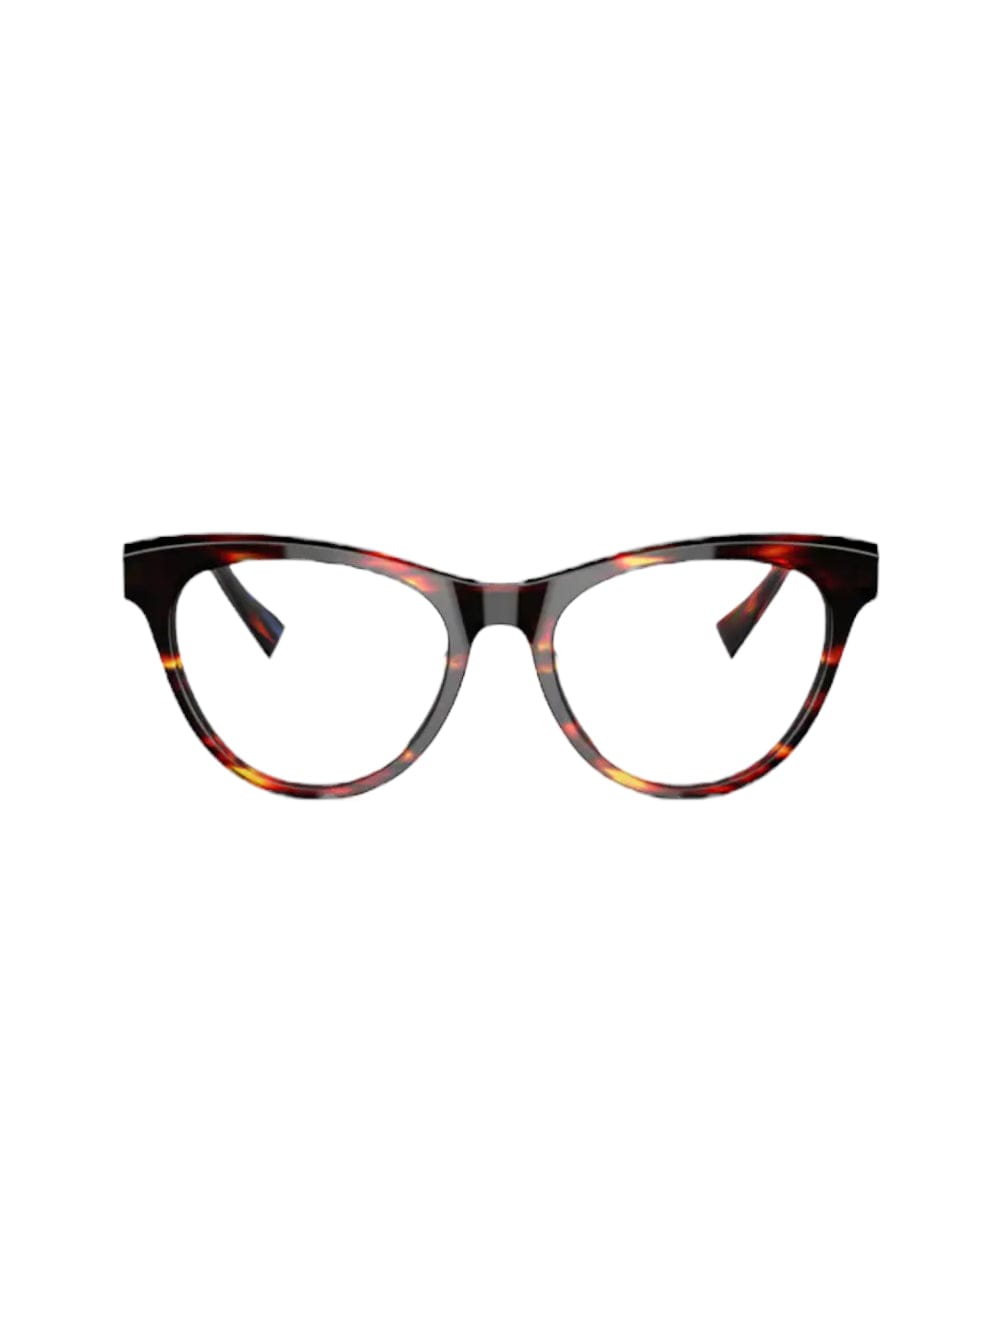 Anastia - 3140 Glasses